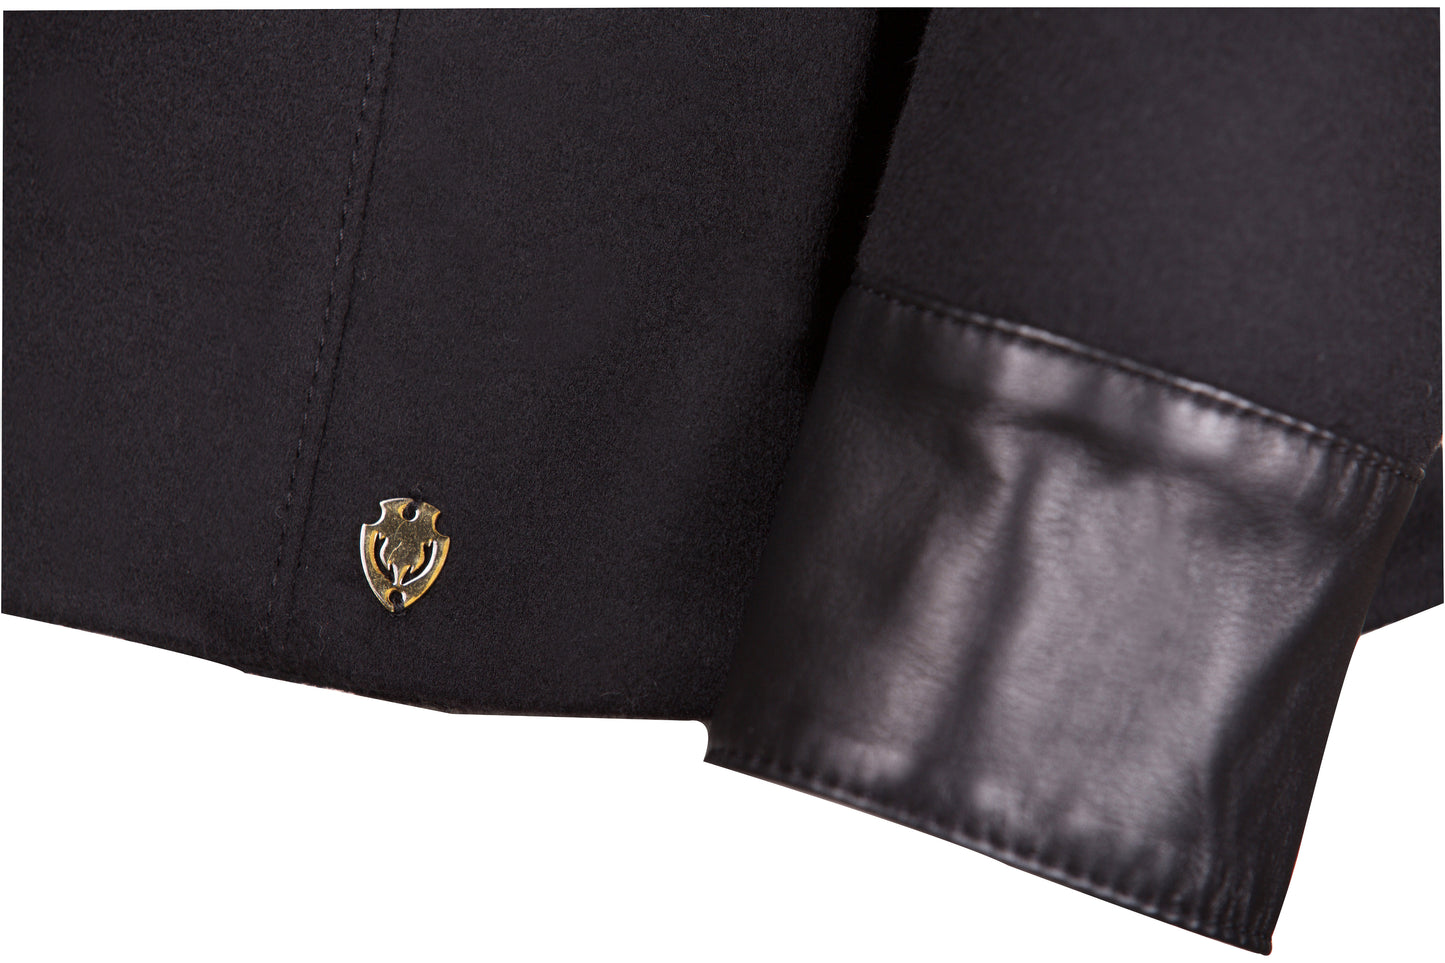 Winter Tailored Mink Merino Wool Reindeer Leather Jacket- Limited Edition